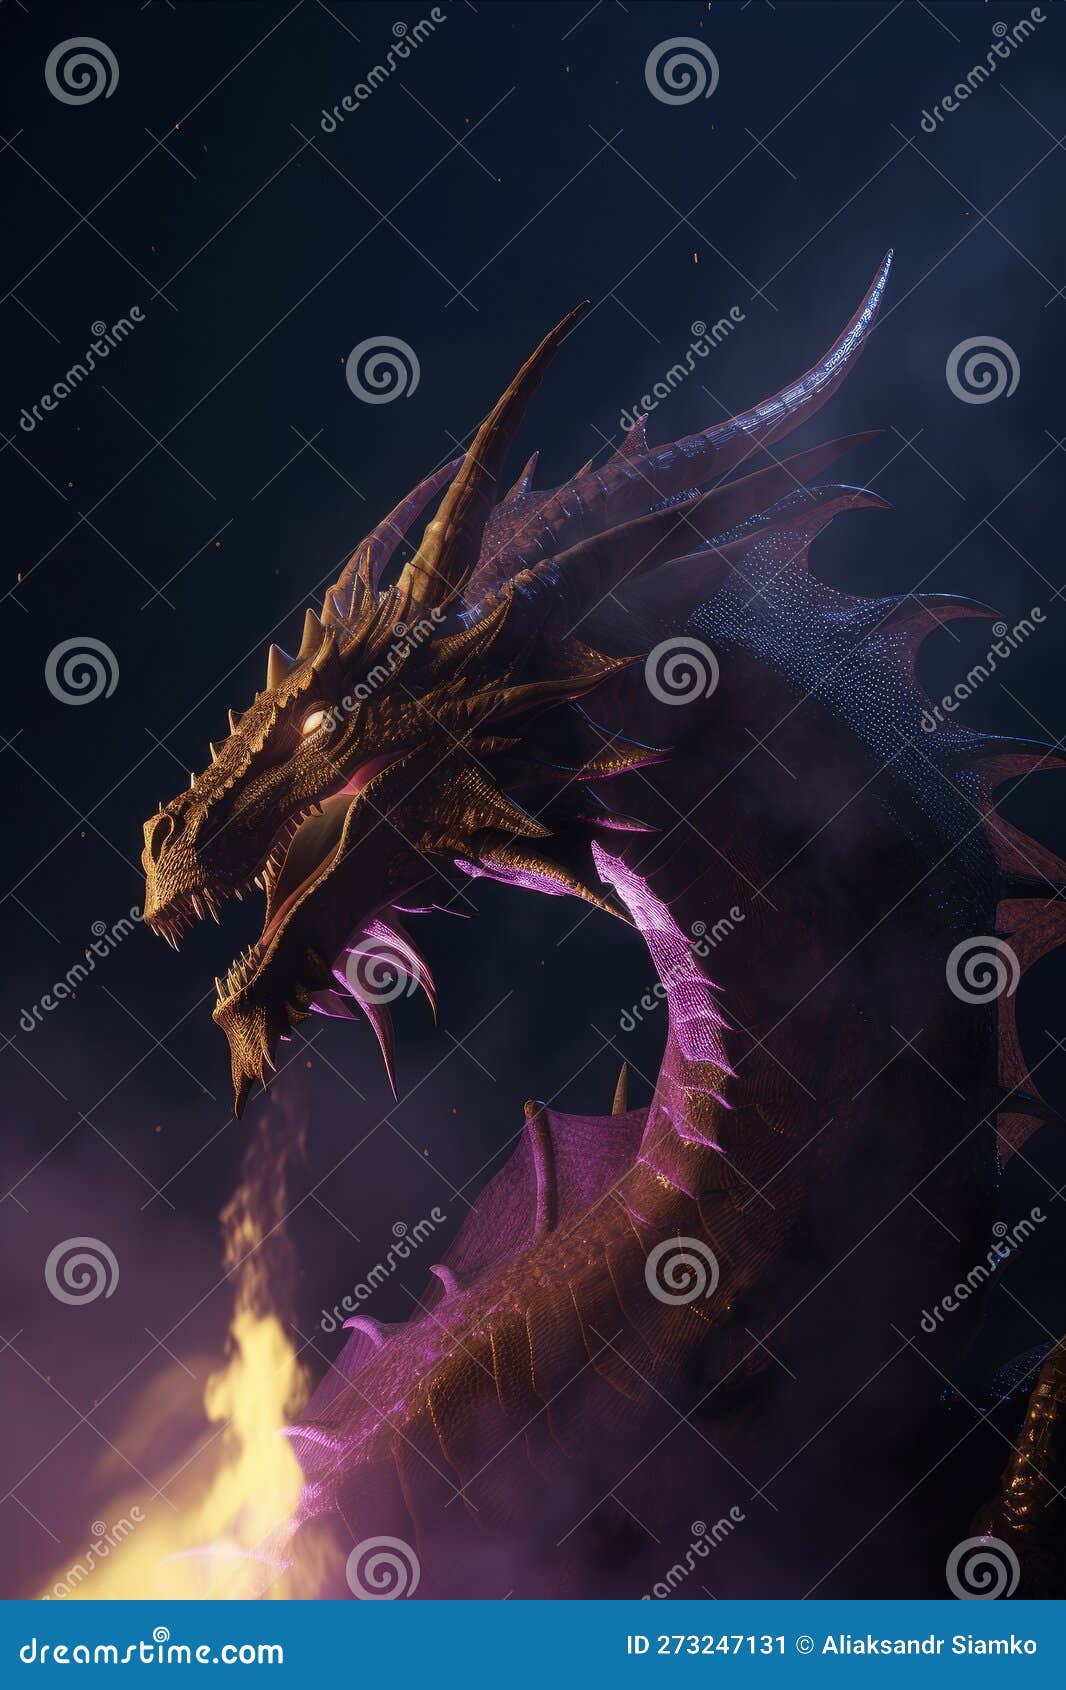 Epic fantasy artworks | Fantasy dragon, Dragon wallpaper iphone, Dragon  pictures